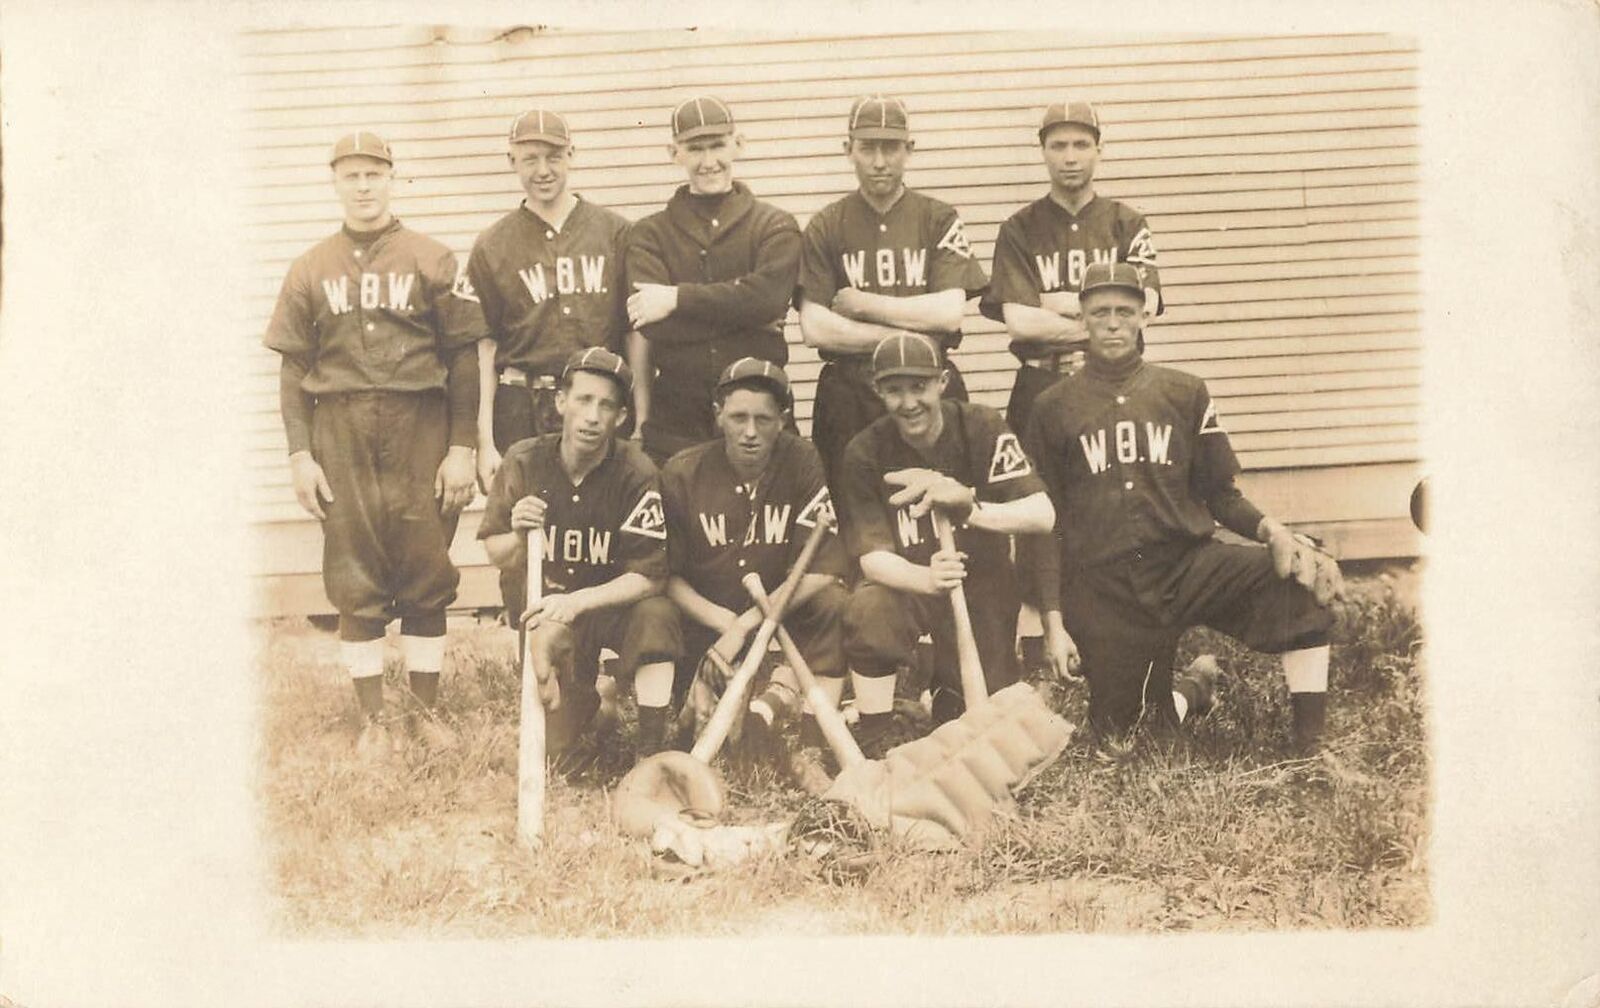 1910s RPPC Baseball Team Real Photo Postcard W.B.W. Rough Kids Base Ball sports